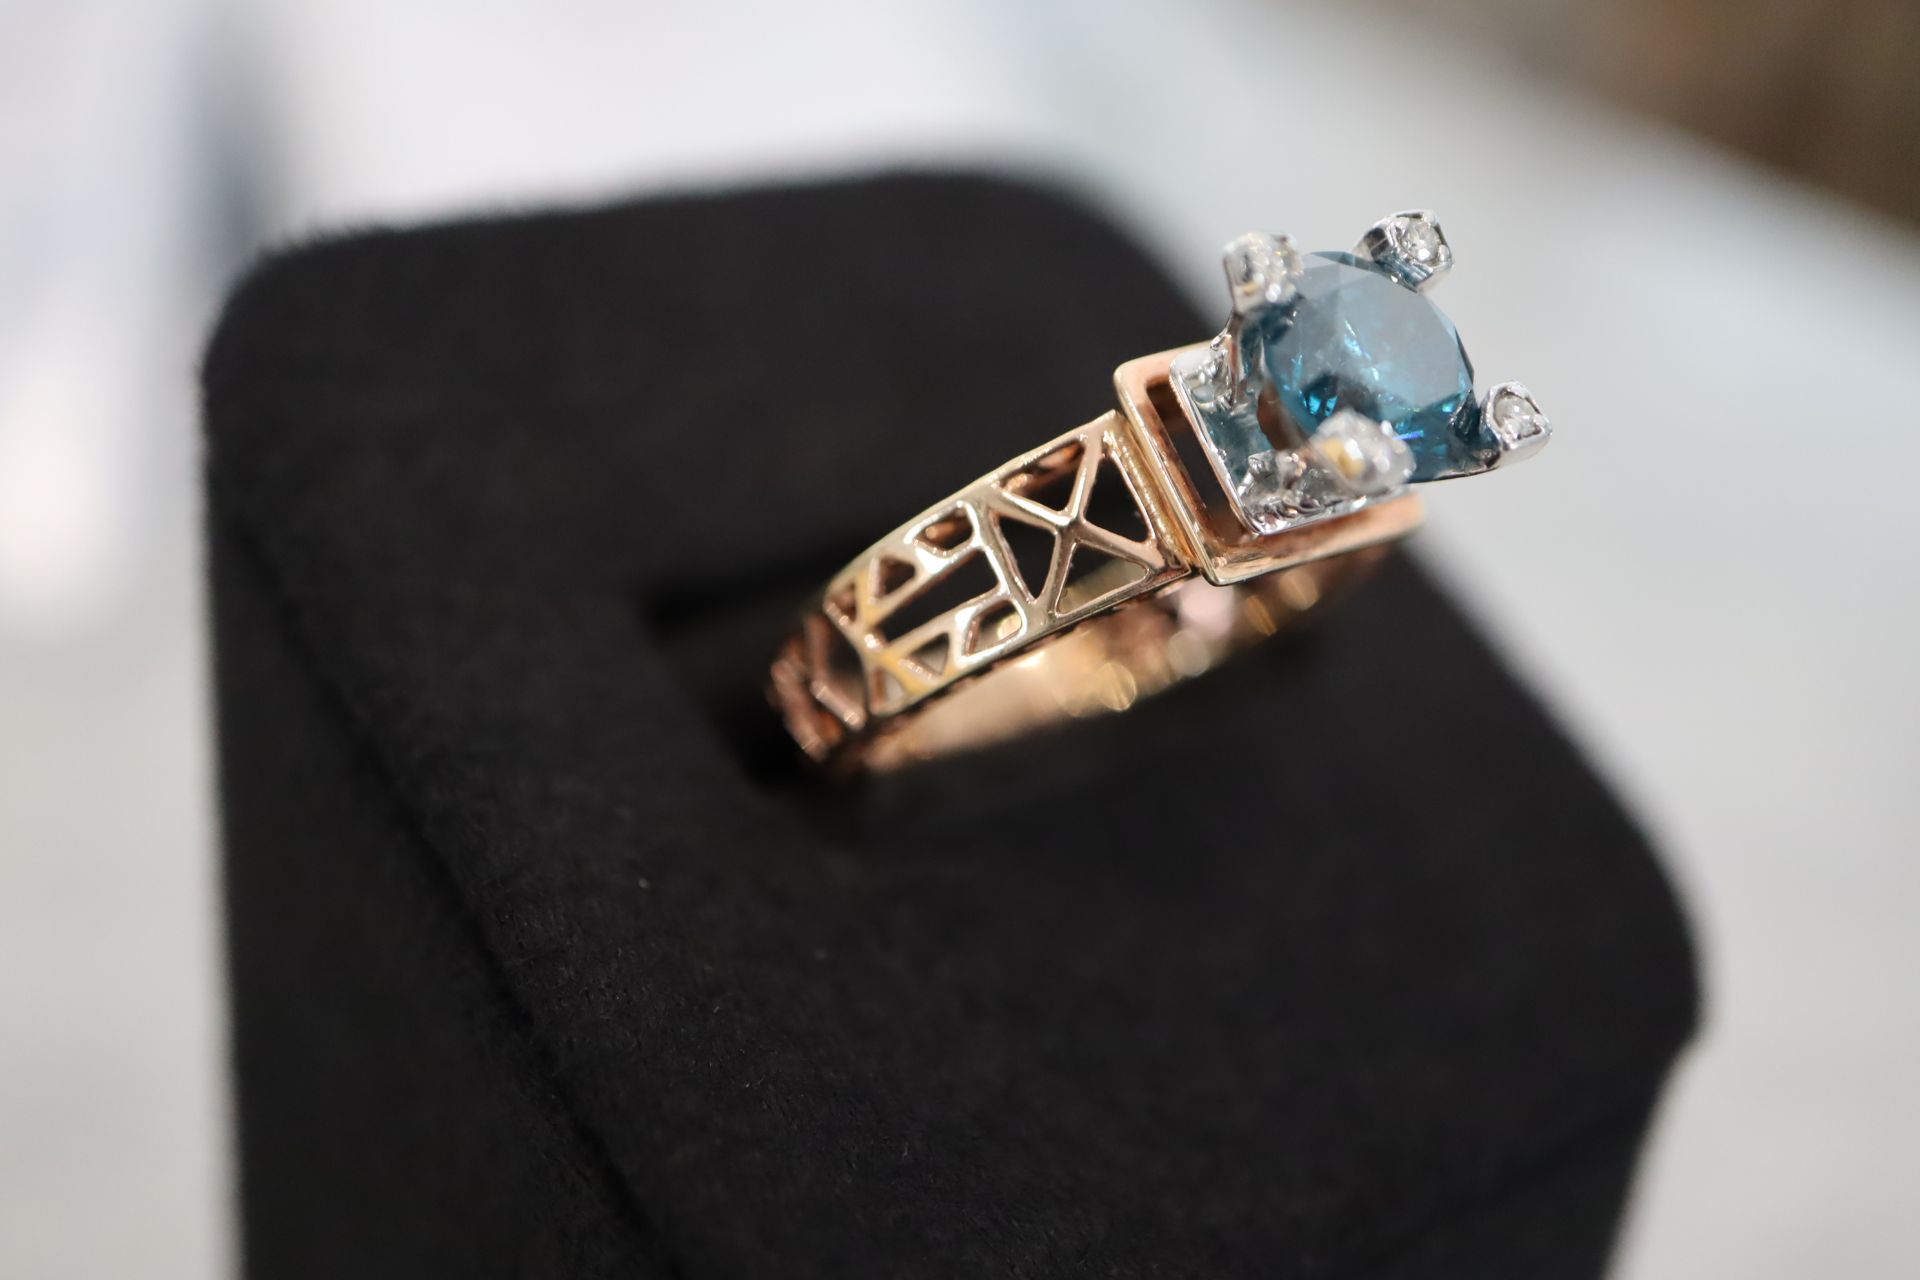 BLUE DIAMOND RING - 14K ROSE GOLD (UK SIZE - M) - Image 2 of 3